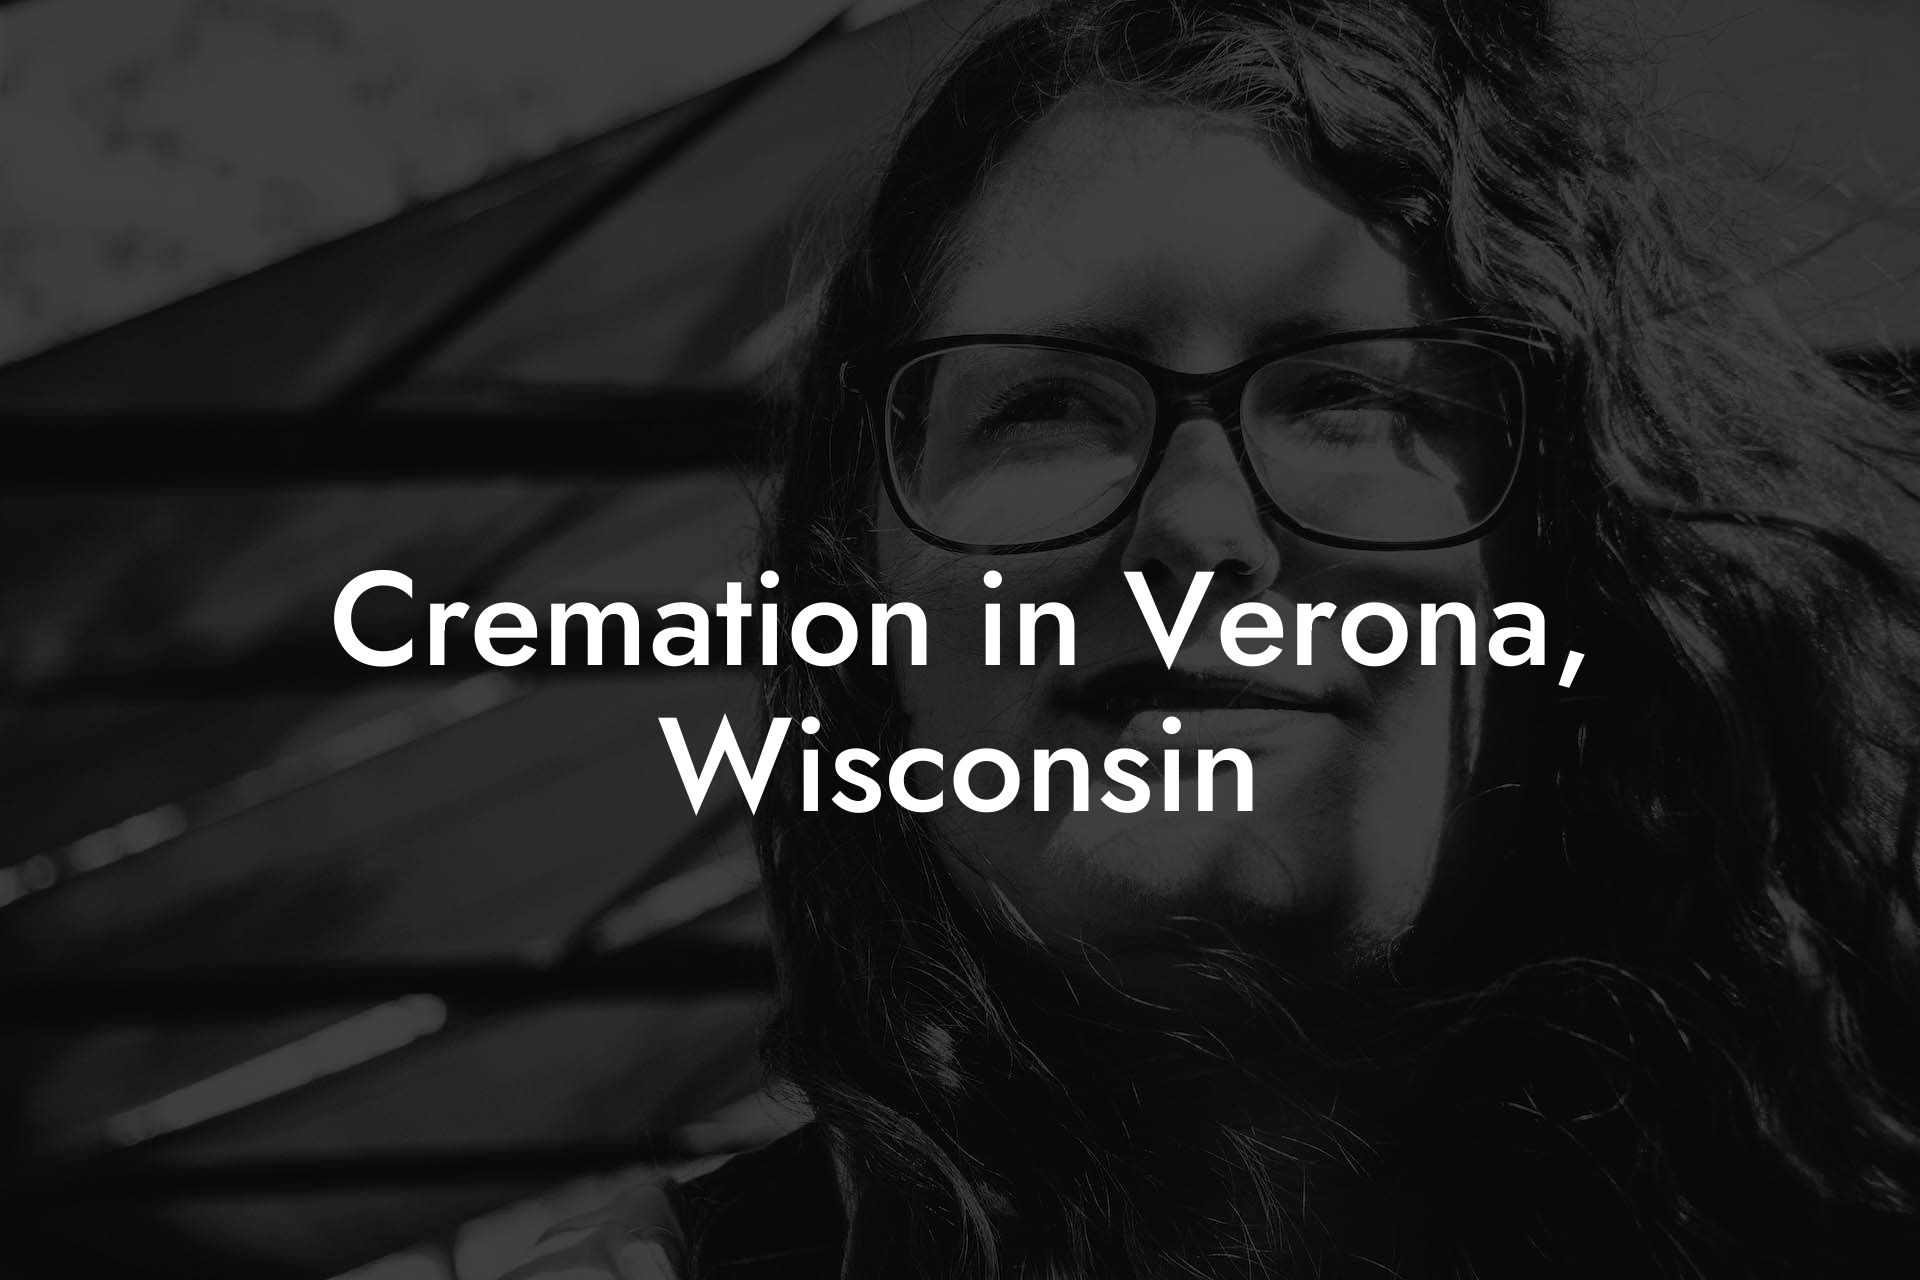 Cremation in Verona, Wisconsin